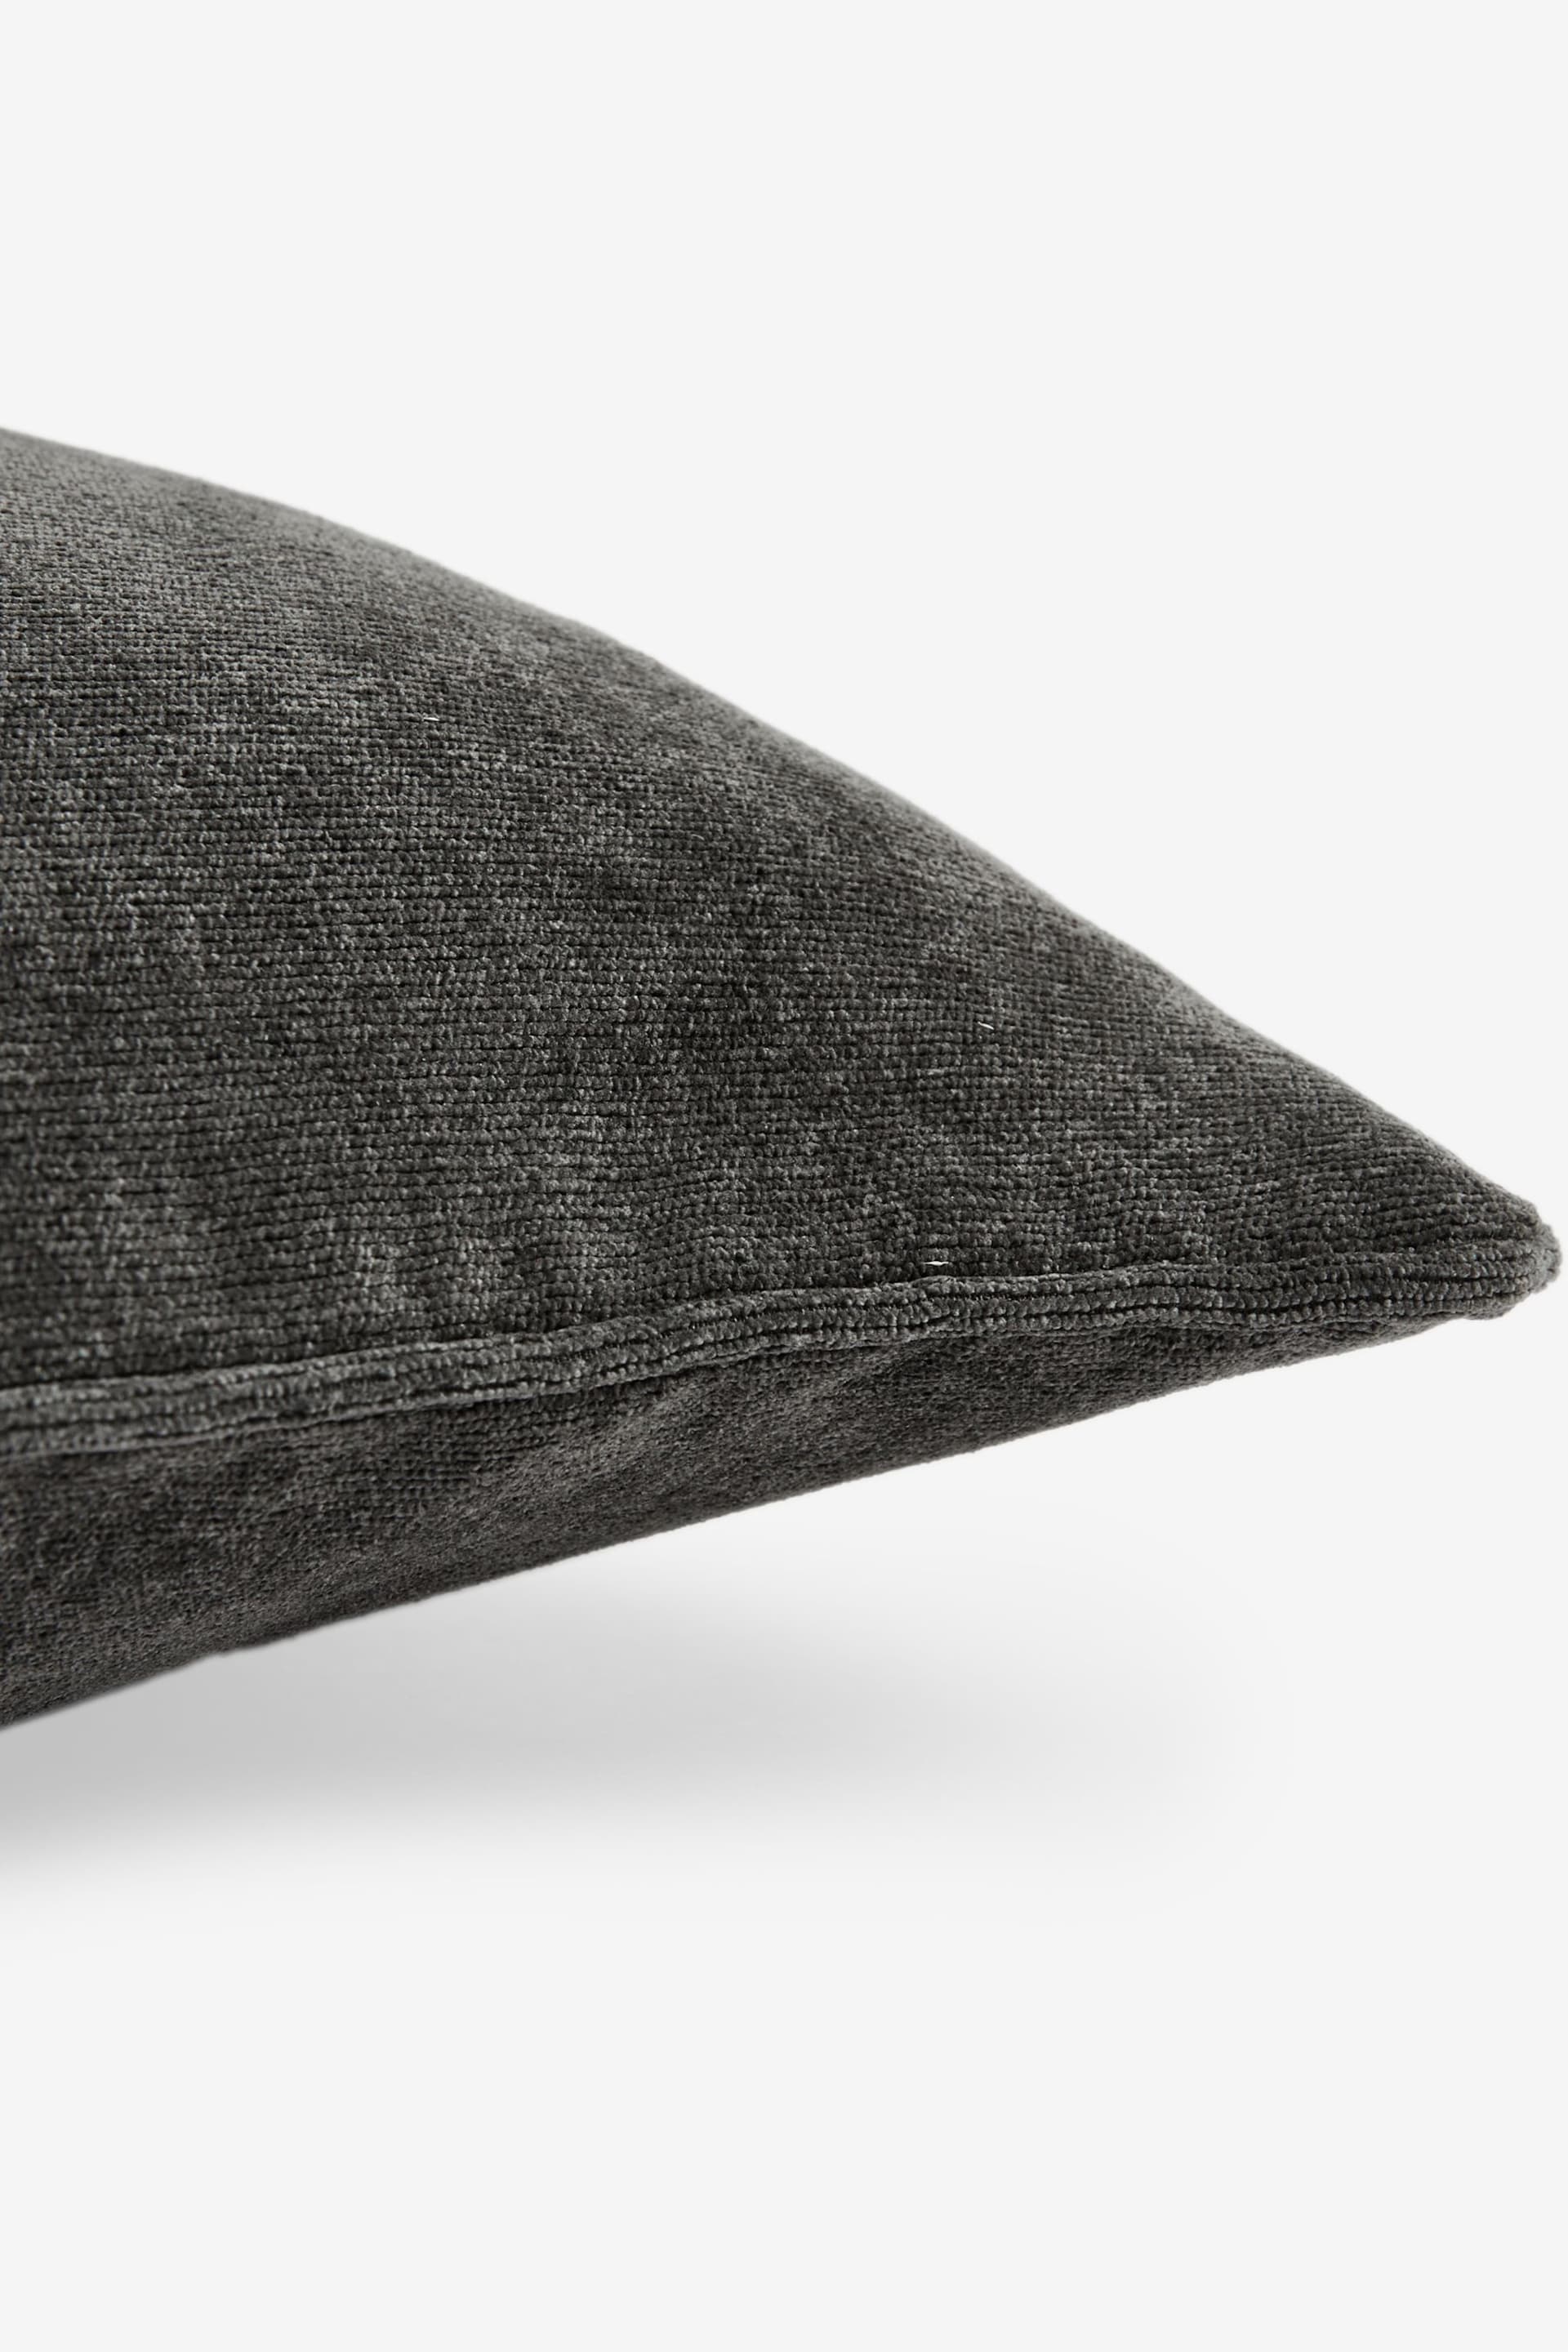 Charcoal Grey 40 x 59cm Soft velour Cushion - Image 2 of 5